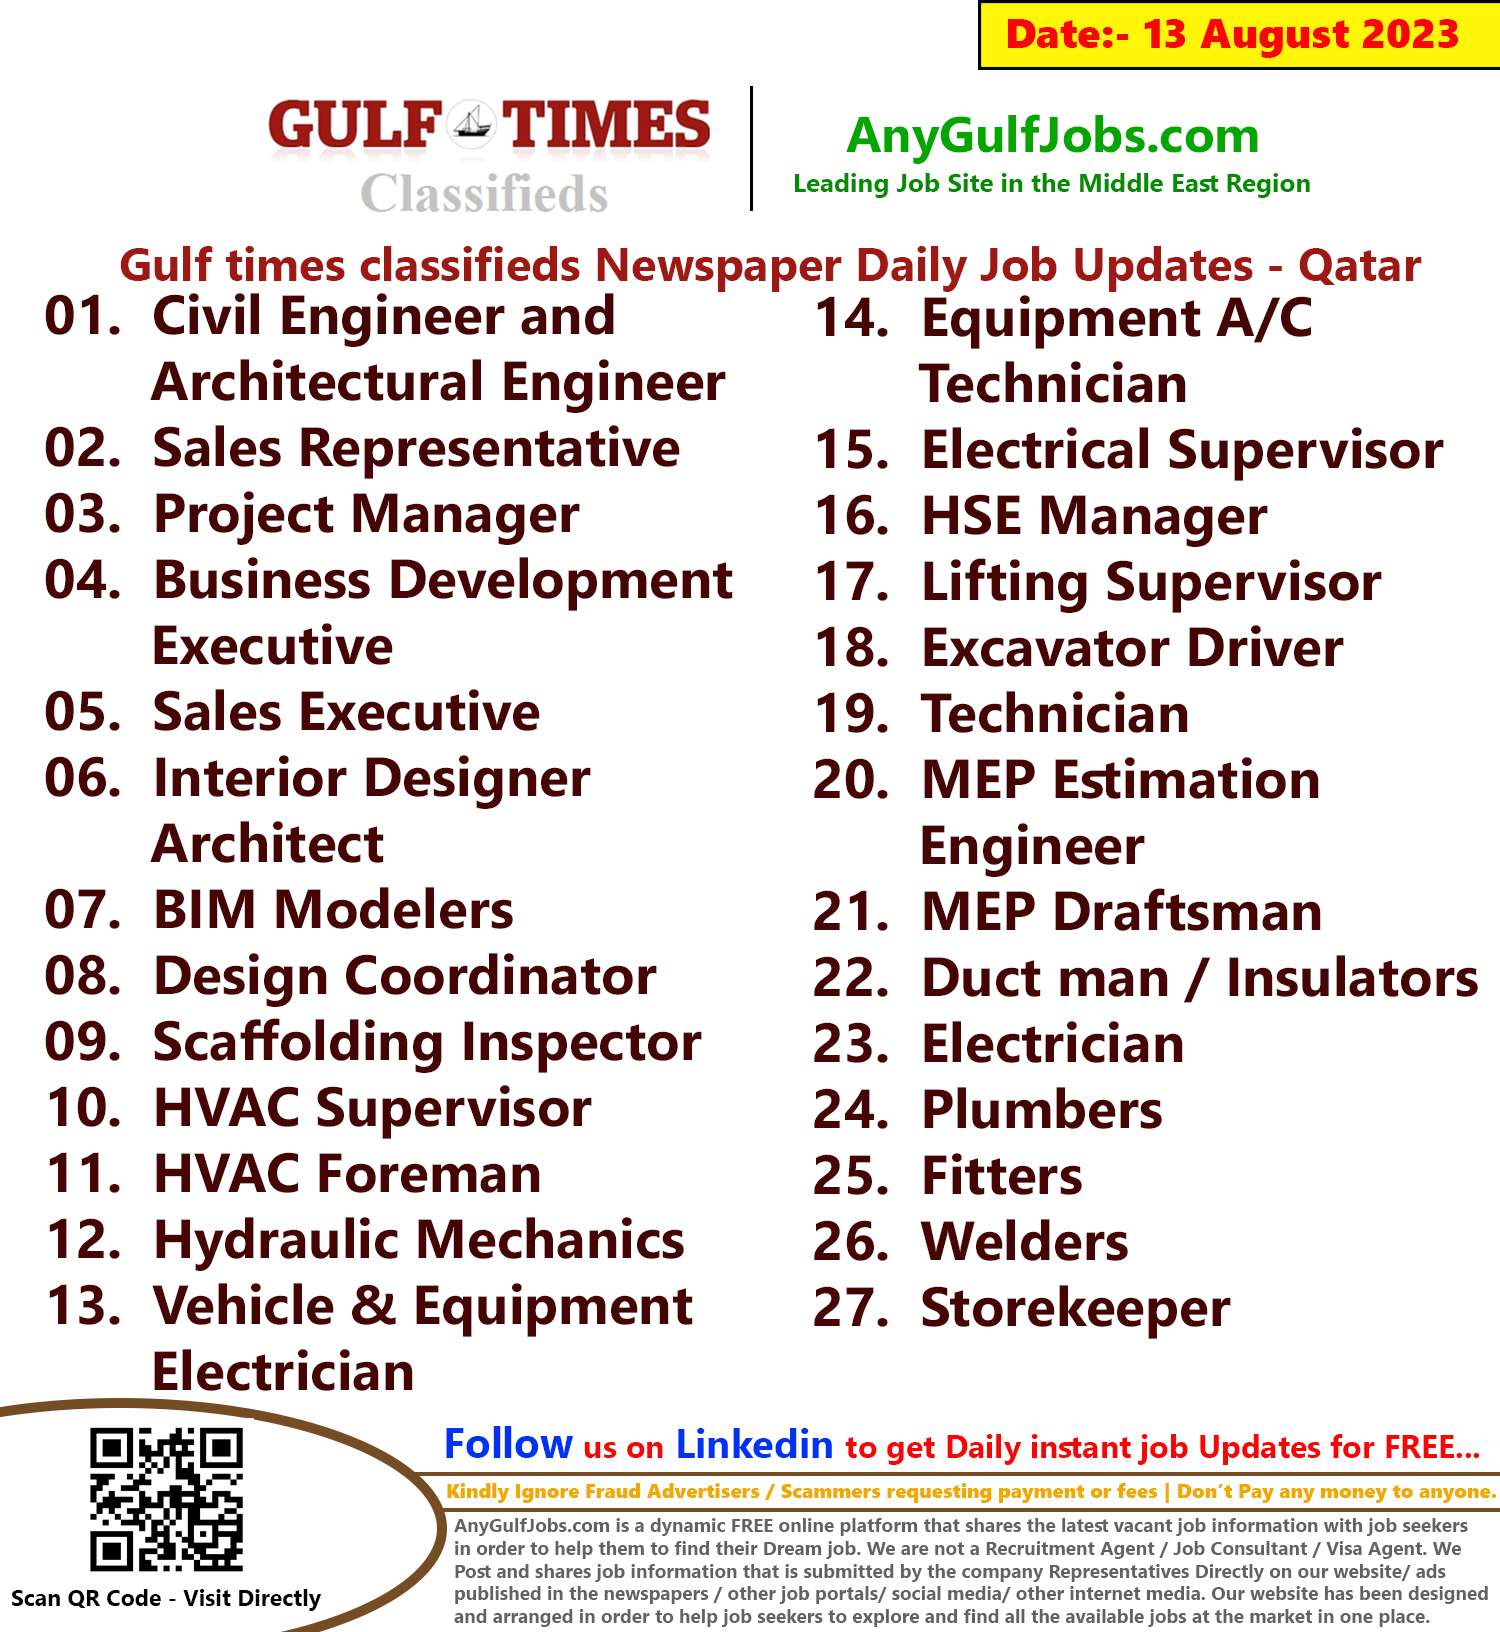 Gulf times classifieds Job Vacancies Qatar - 13 August 2023